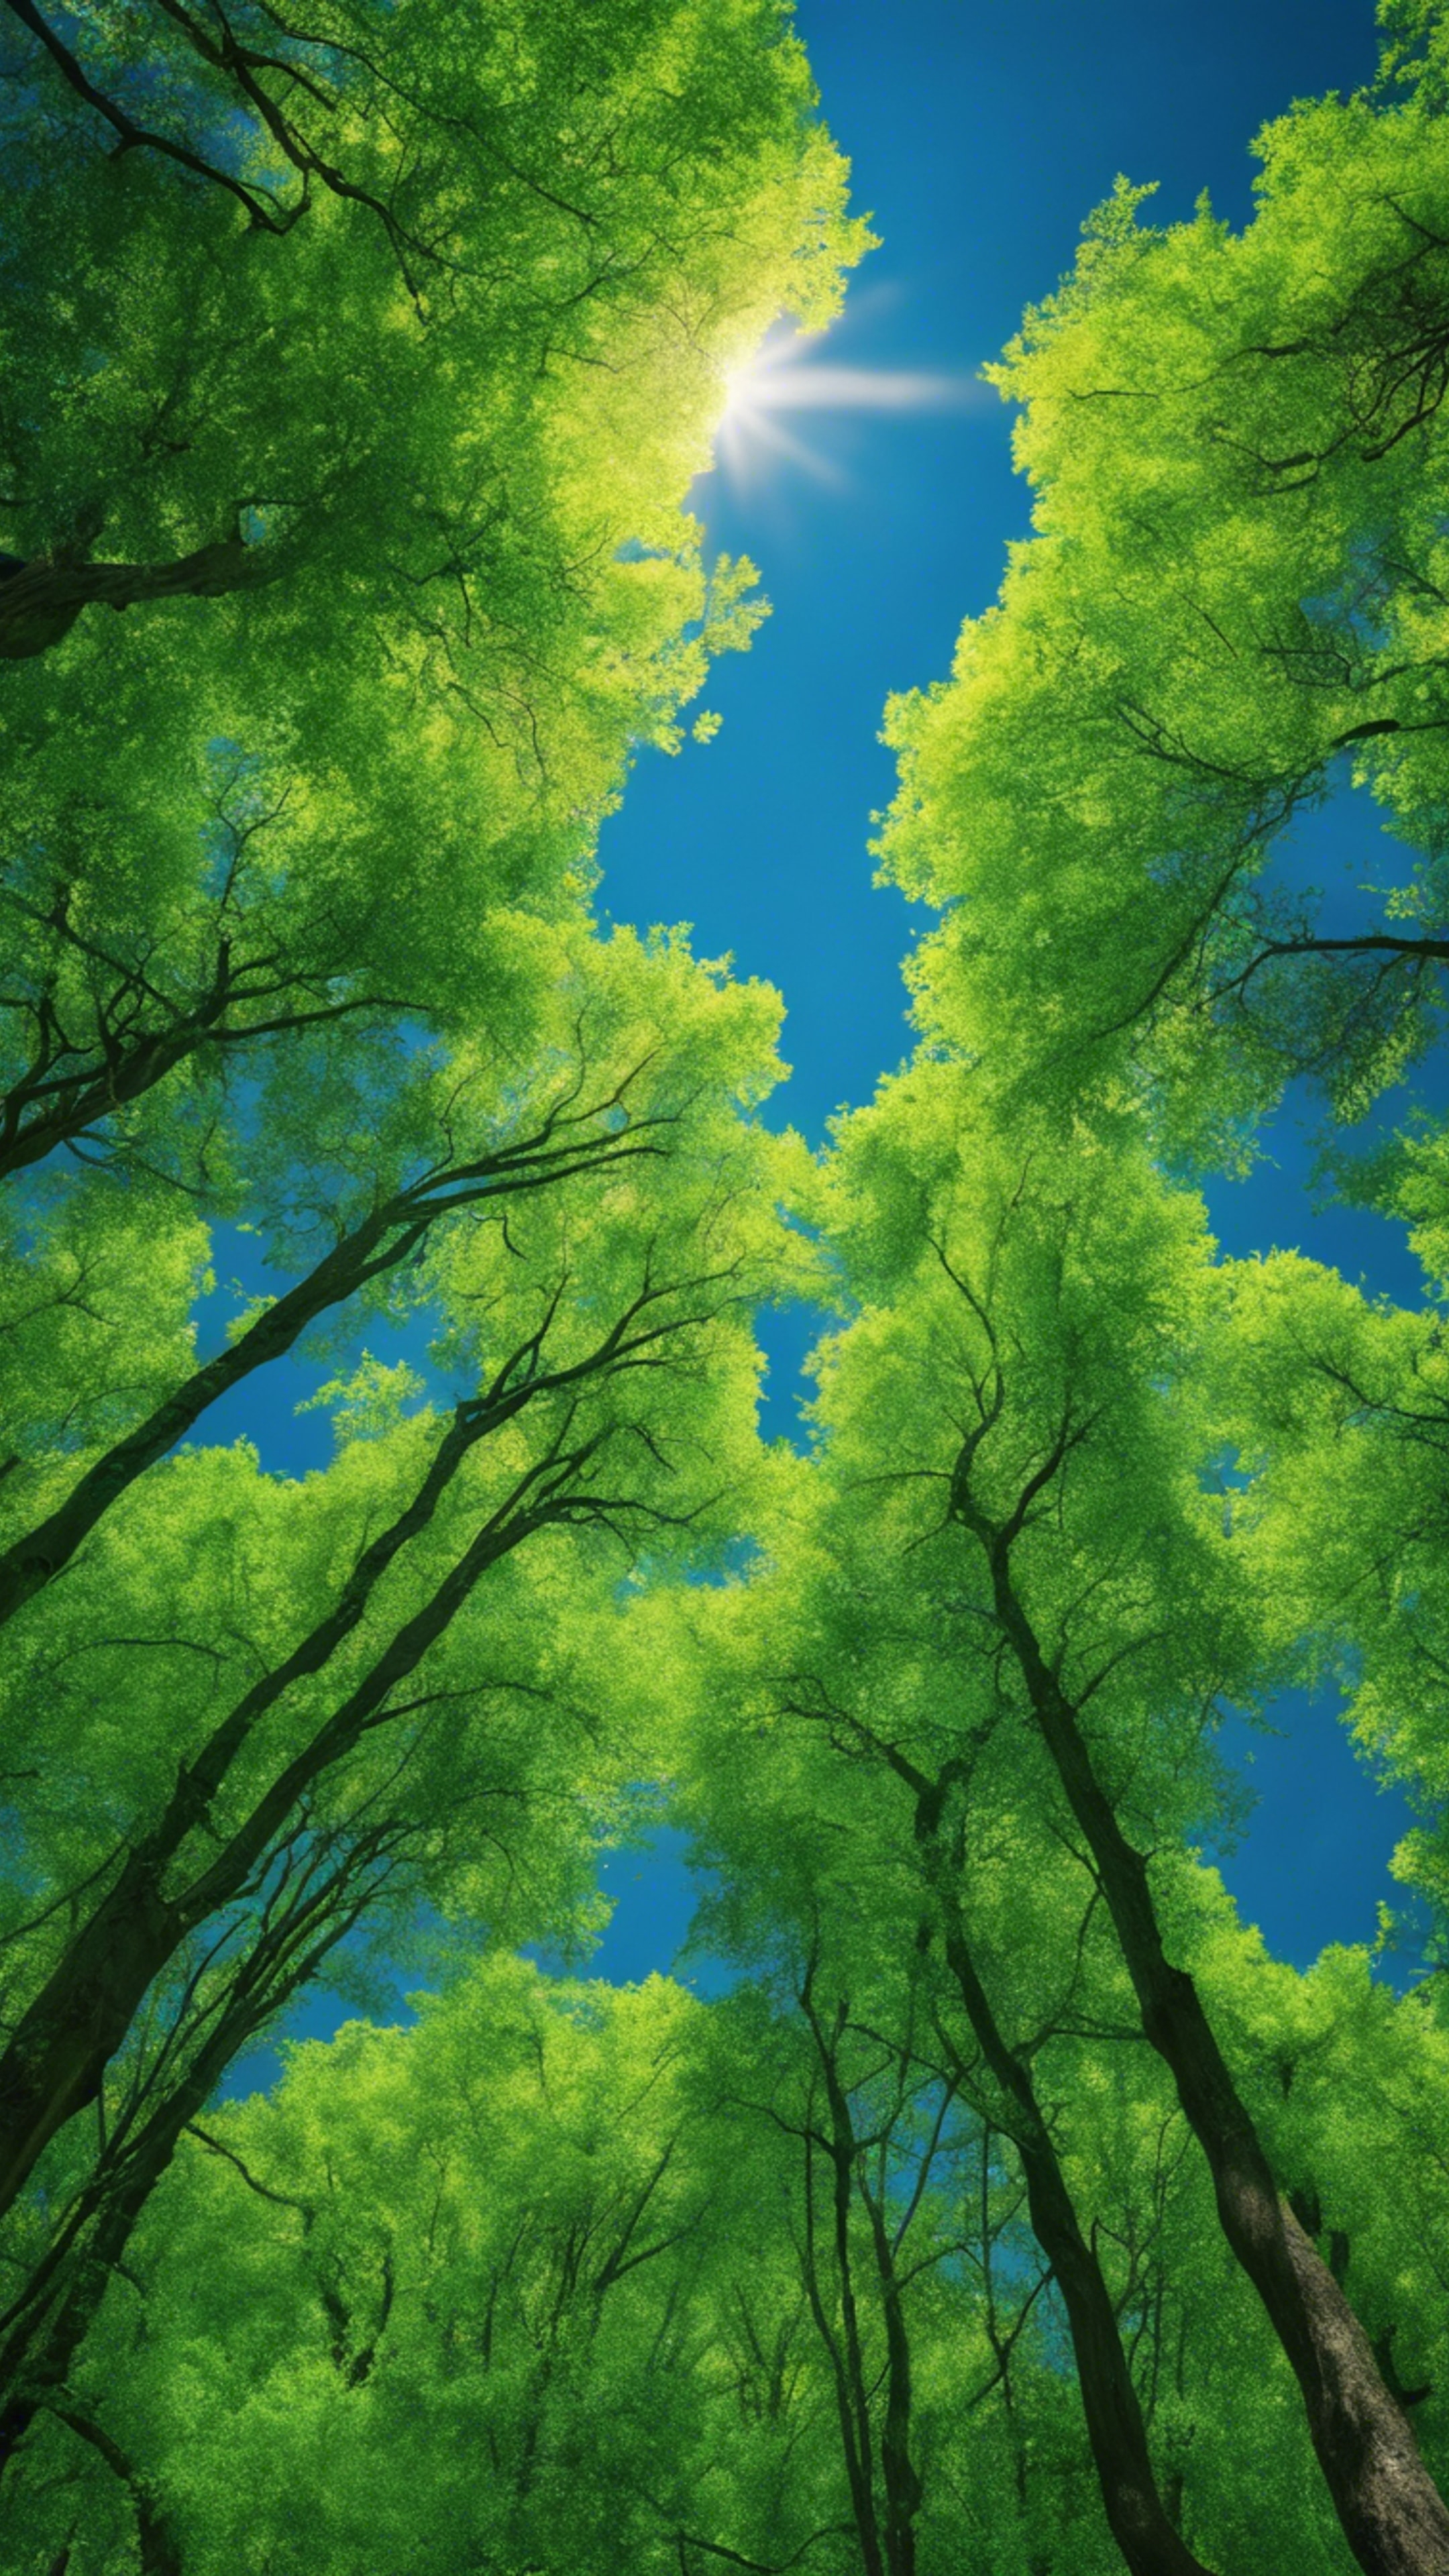 A vibrant green forest under a deep blue sky. 墙纸[dfb81149561043a7a18e]